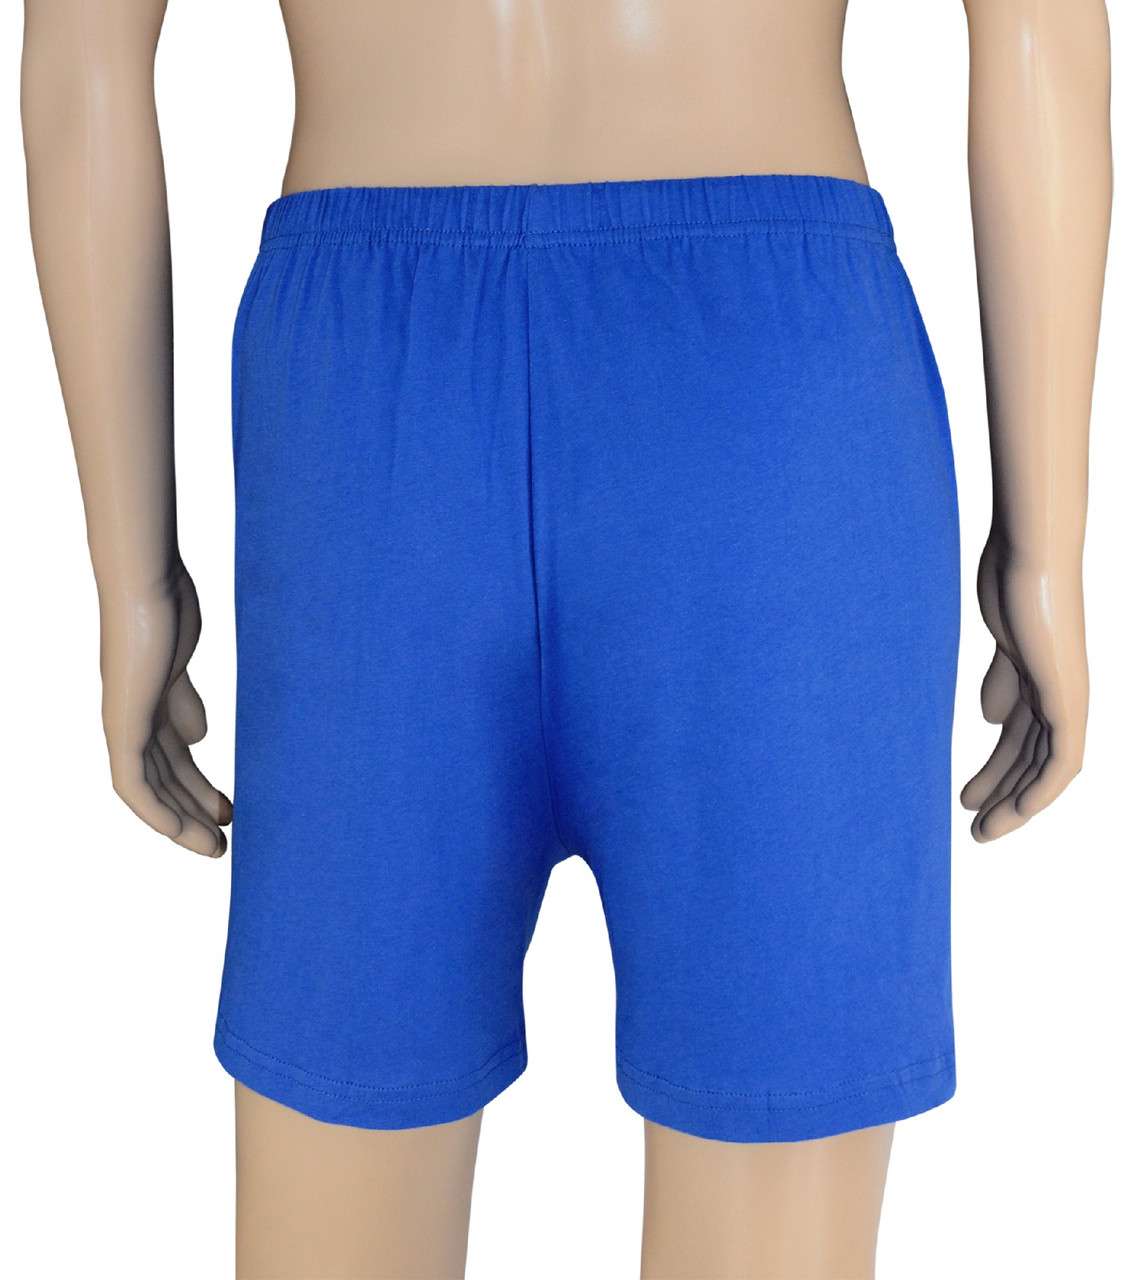 Blue Printed Cotton Boxer Shorts, Size: Medium